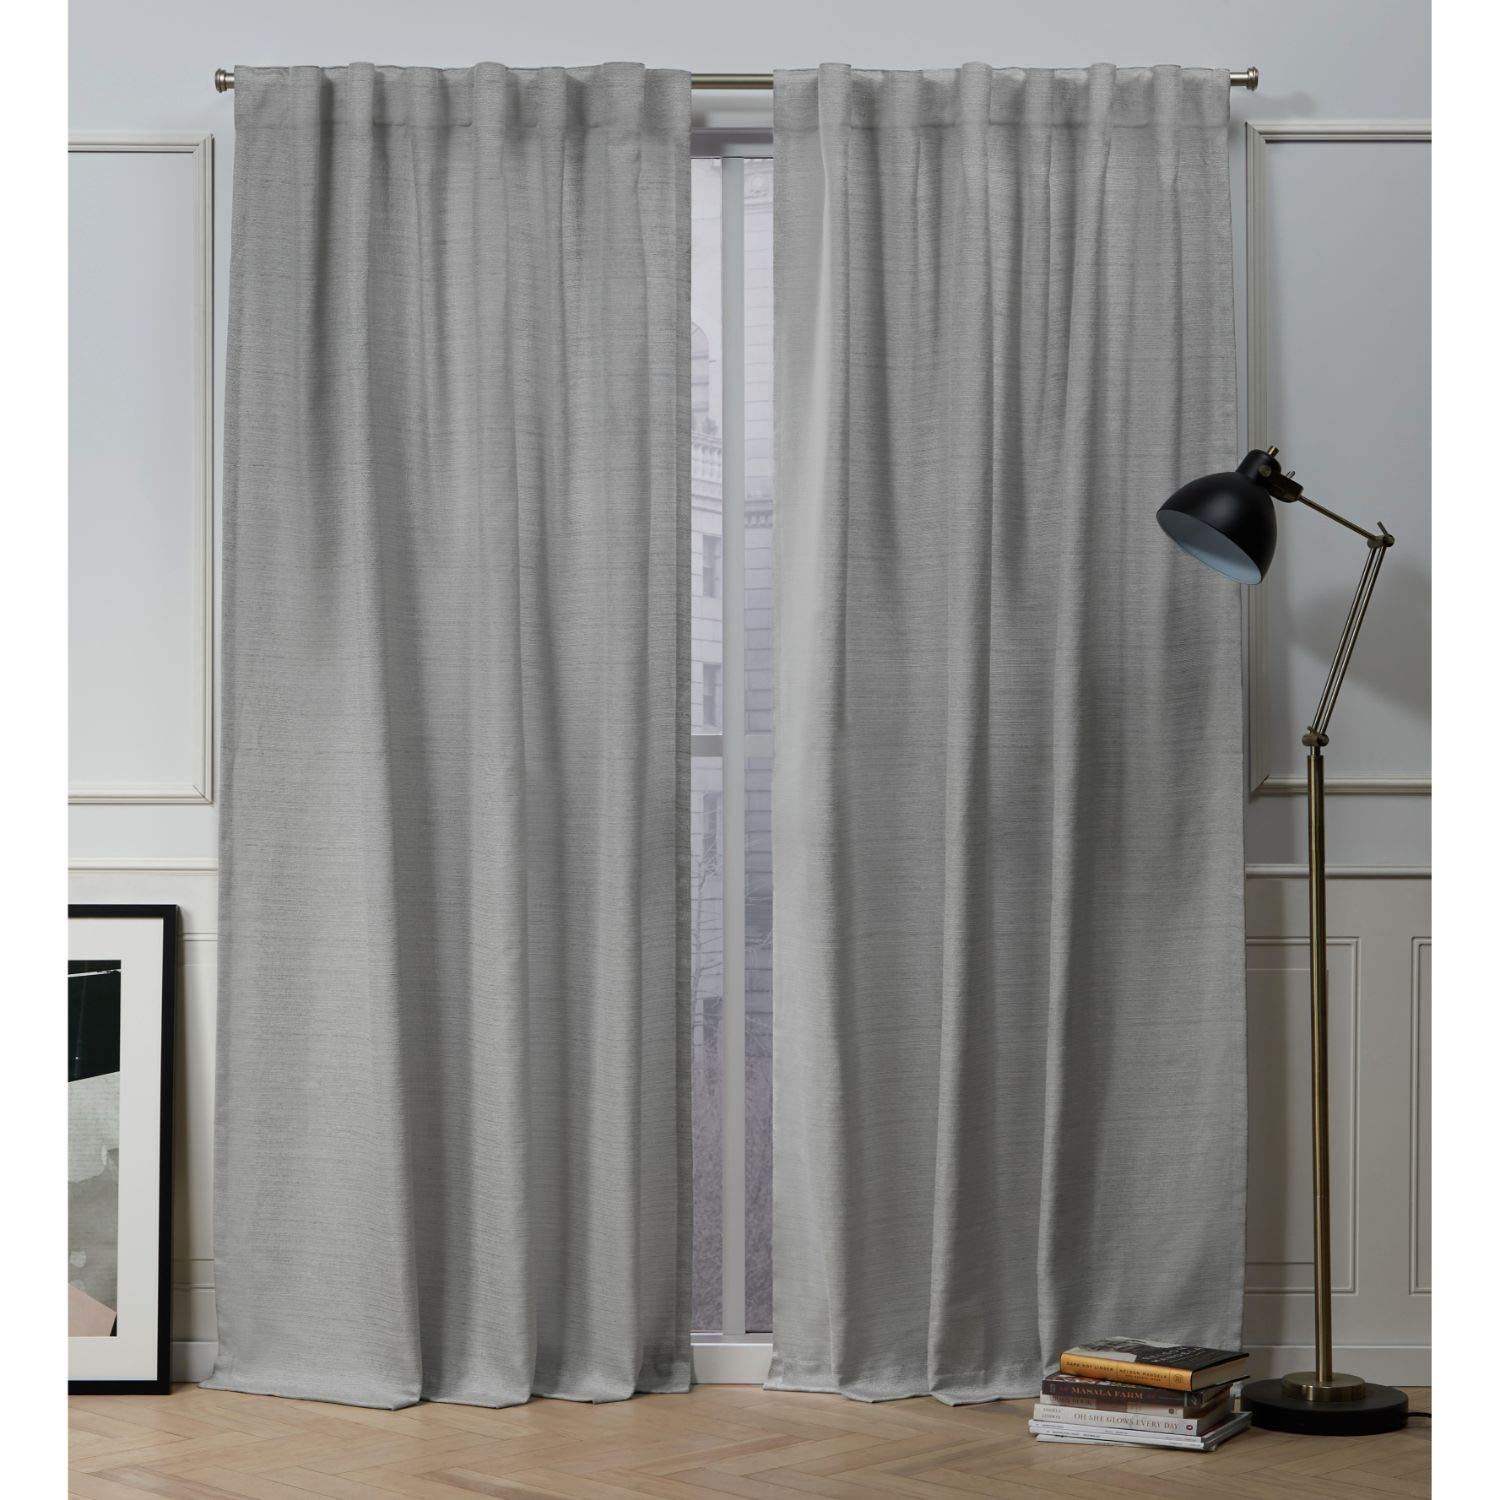 2-Piece 96" x 54" Exclusive Home Curtain Panels (Indigo) $5.20, 2-Piece 84" x 54" Nicole Miller Curtain Panels $6.20 & More + Free Shipping w/ Prime or $35+